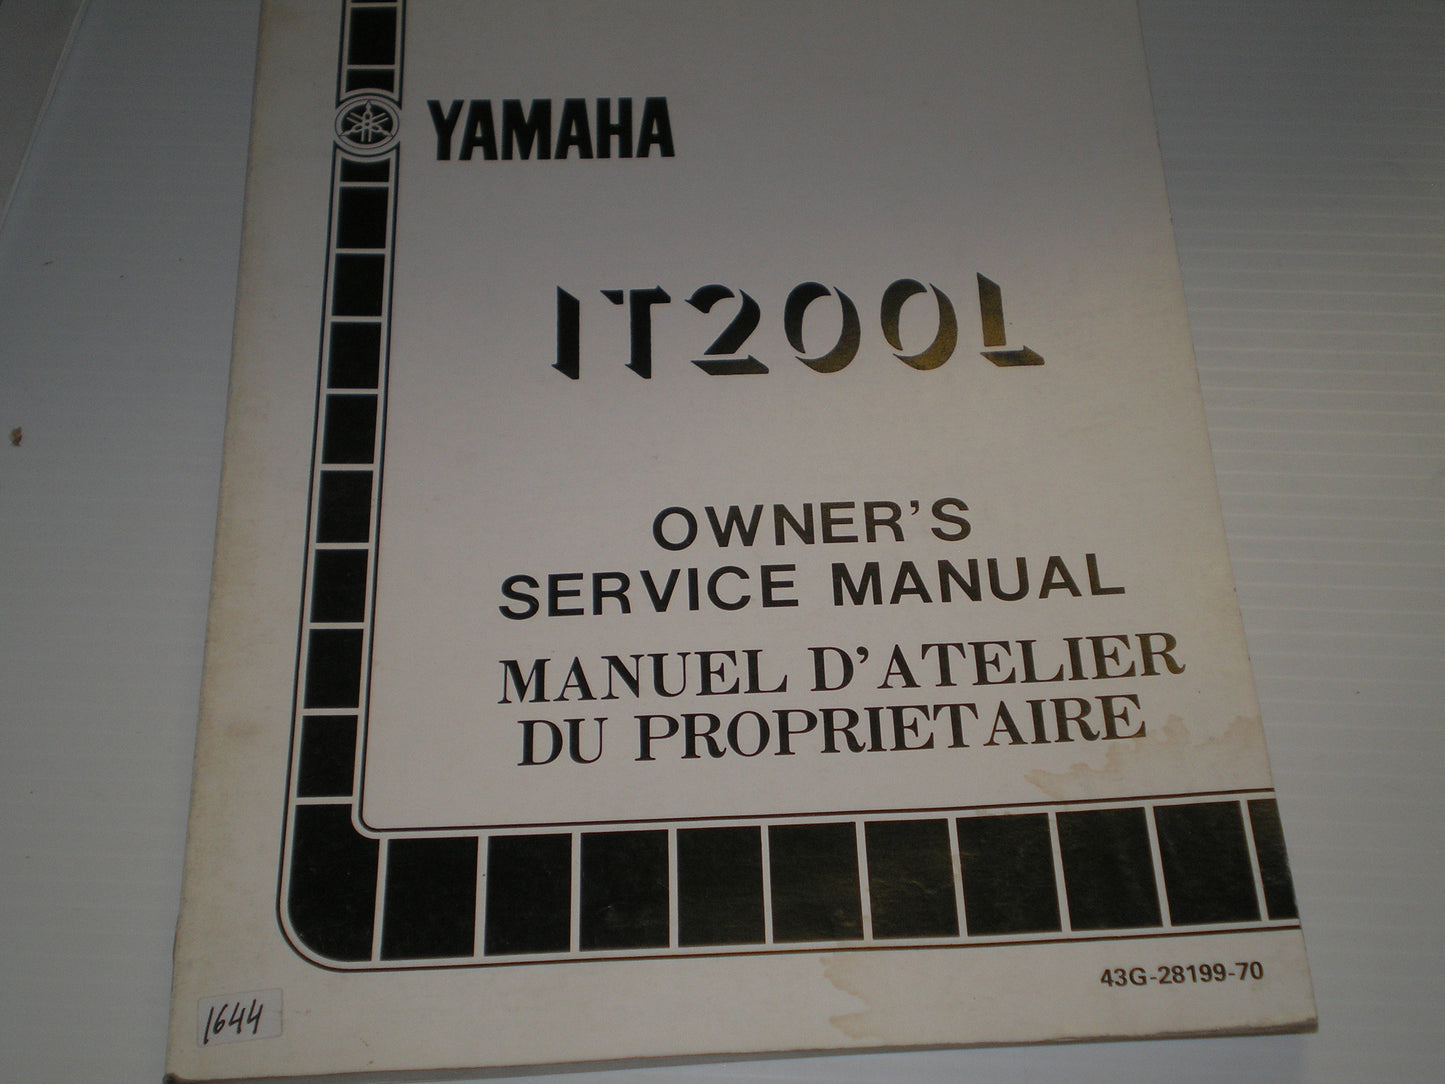 YAMAHA IT200L 1984  Owner's Service Manual  43G-28199-70  #1644